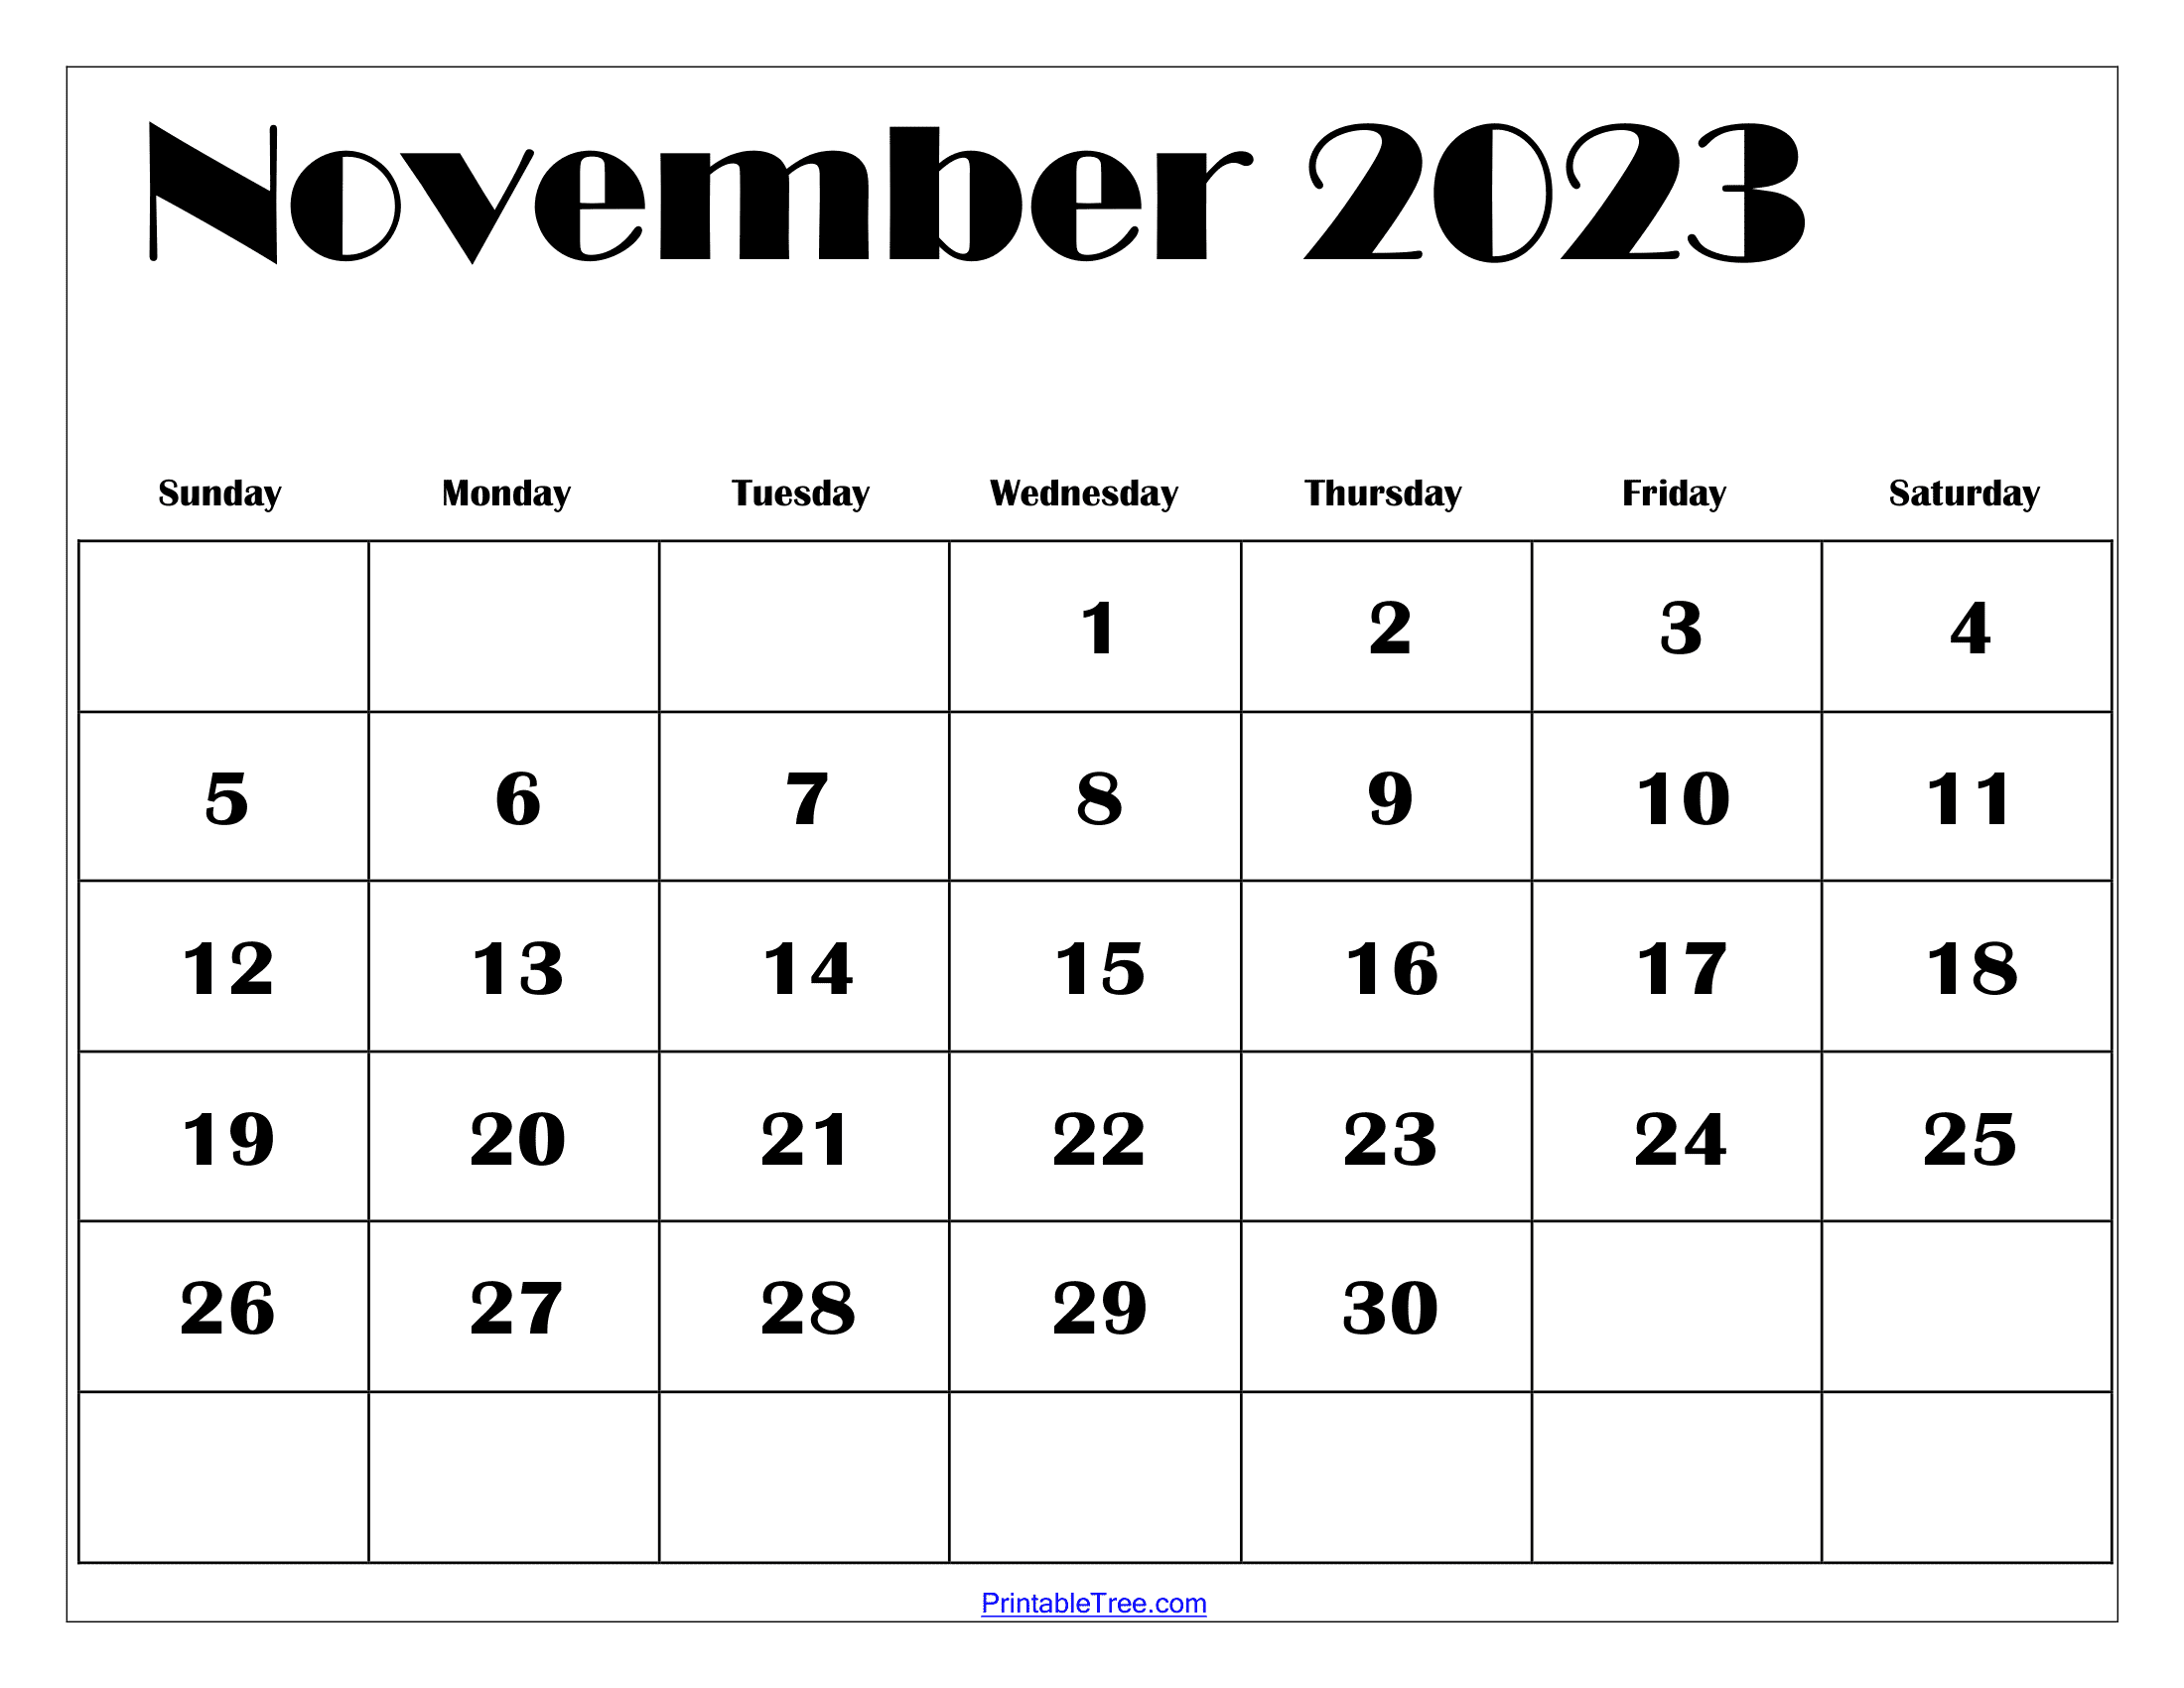 Free november calendar printable pdf with holidays templates